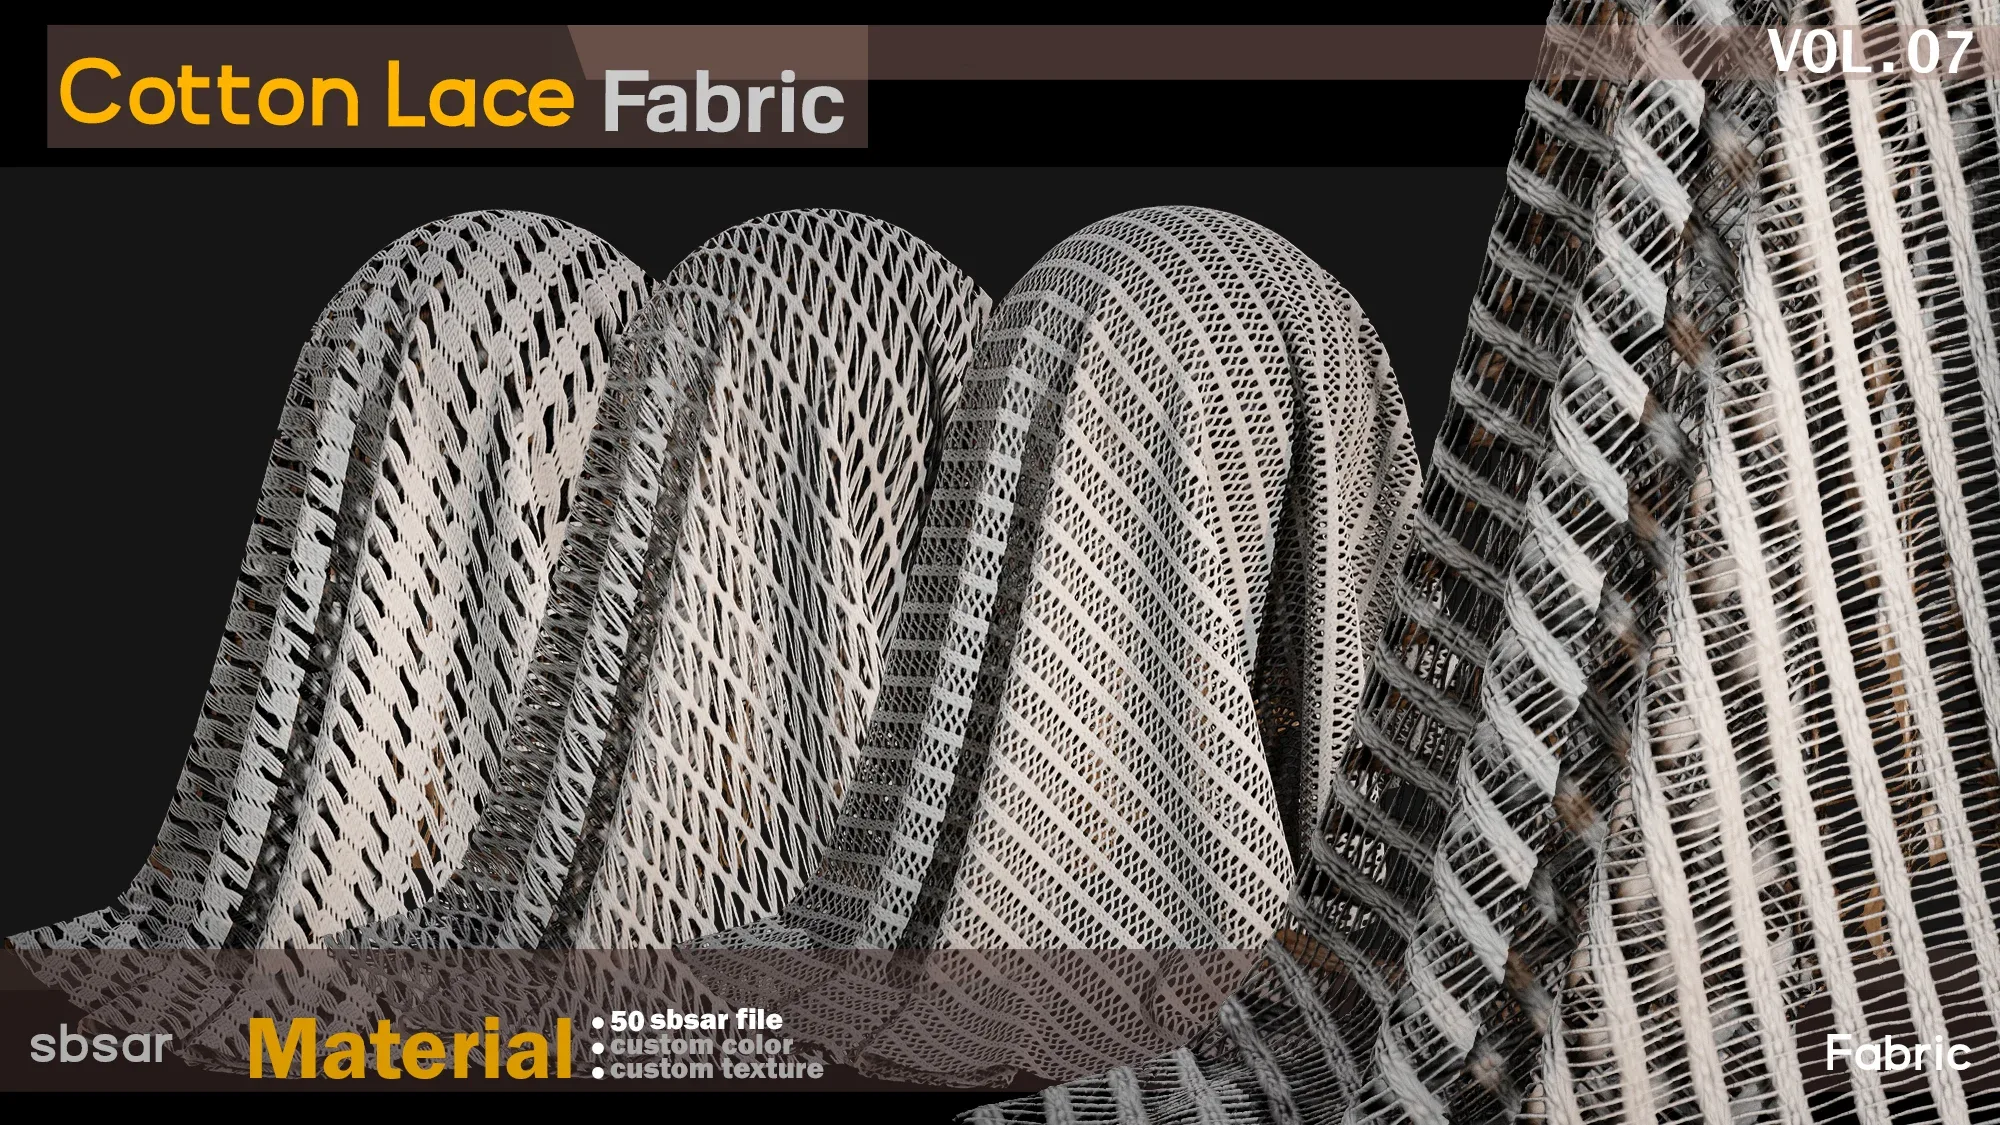 92 Cotton Lace fabric Material -SBSAR -custom color -custom fabric texture -VOL 07